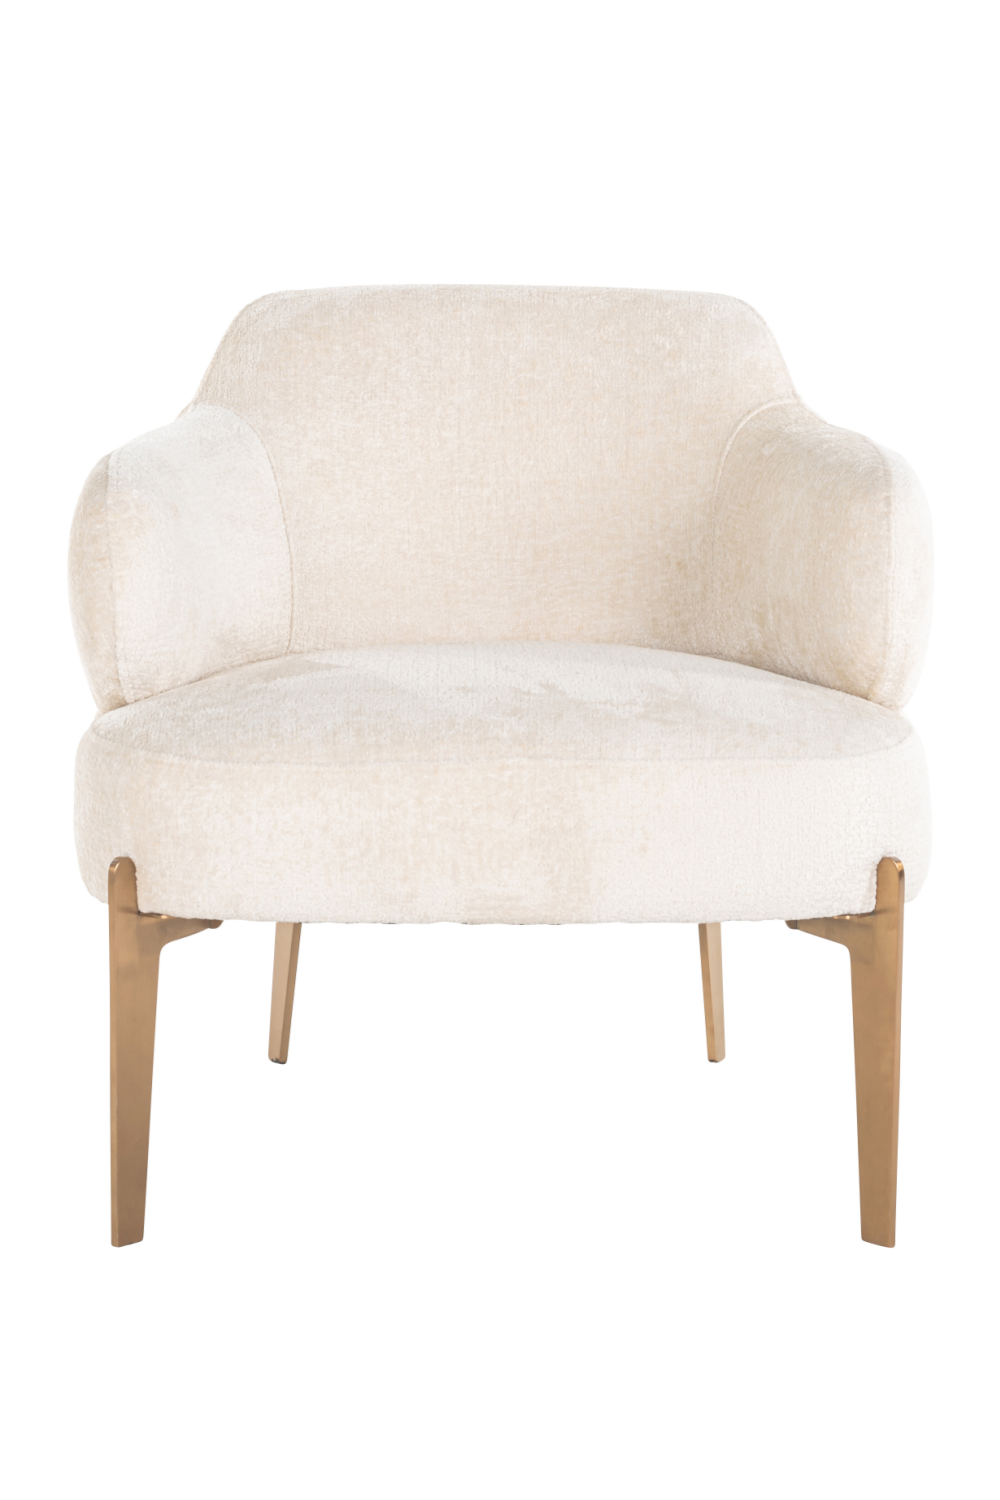 Modern Upholstered Easy Chair | OROA Venus | Oroa.com